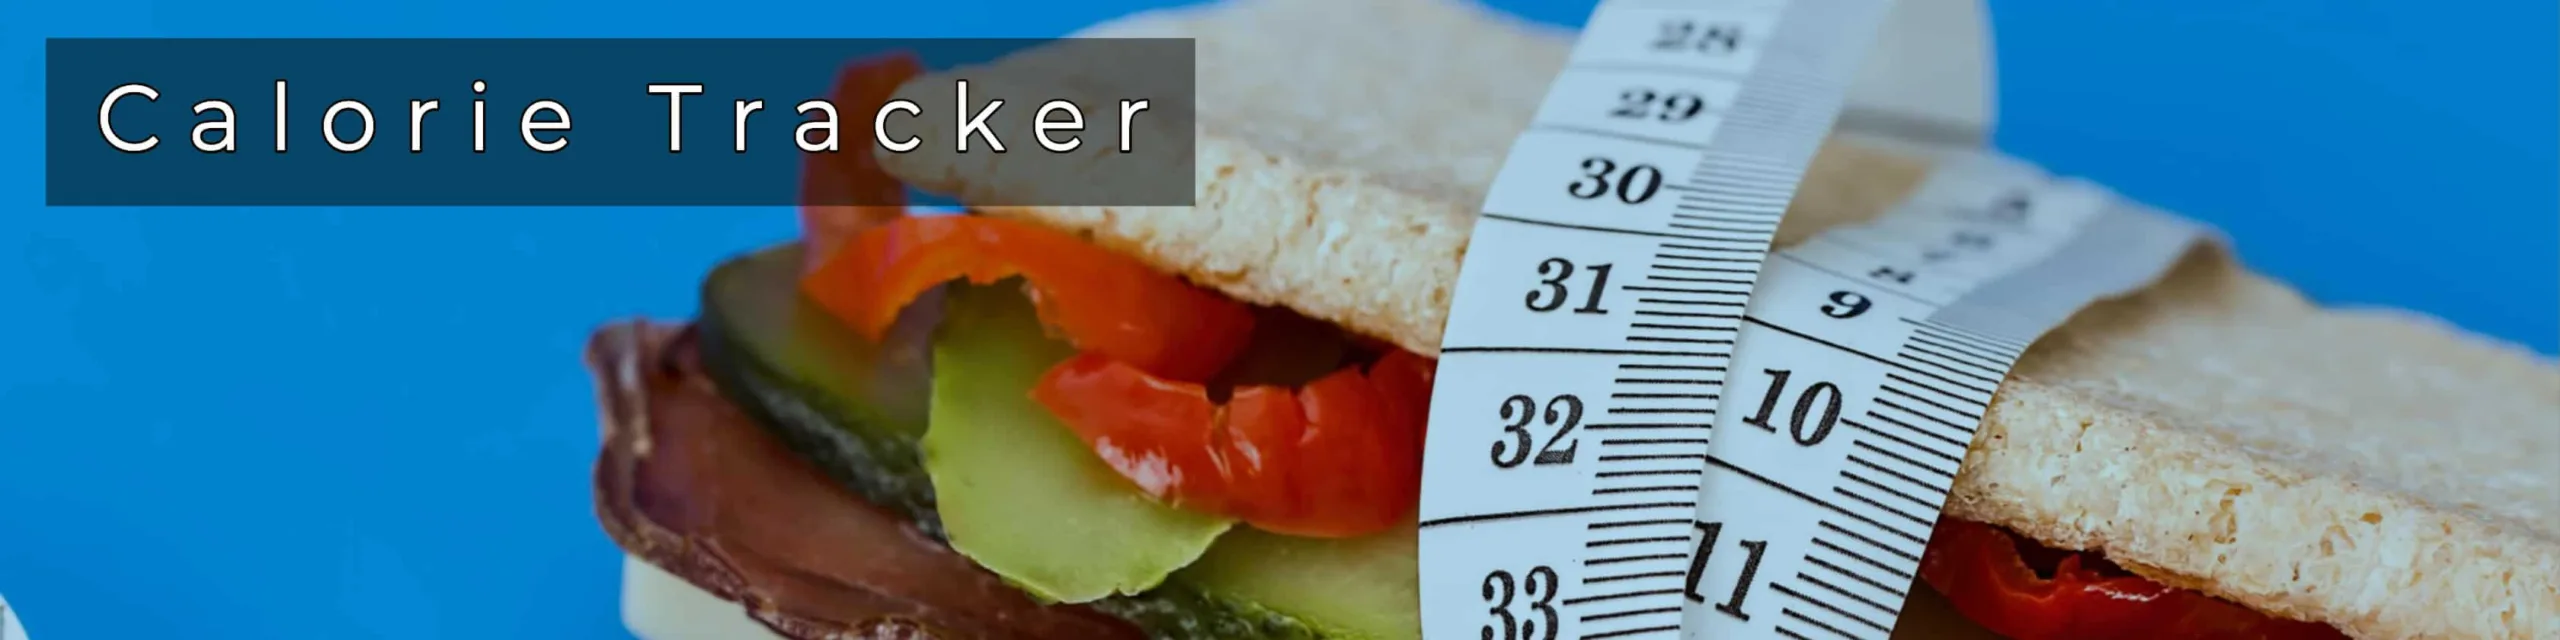 calorie tracker app